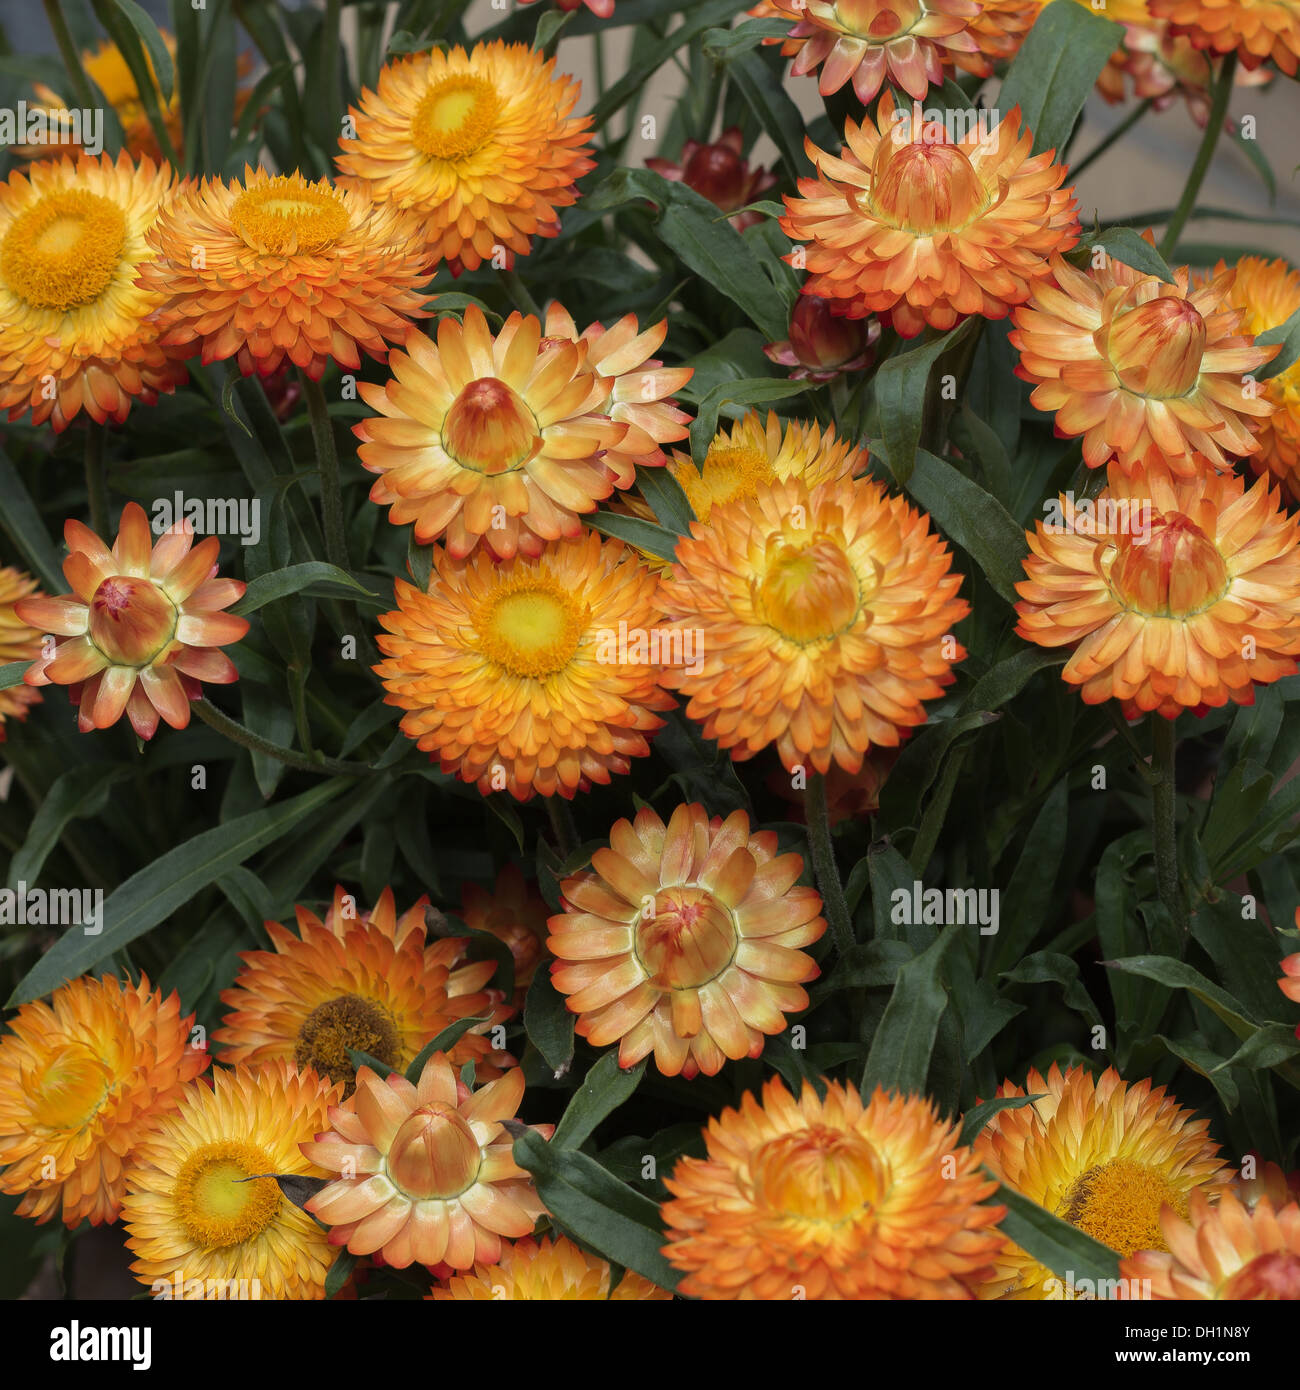 Helichrysum flower bed Stock Photo